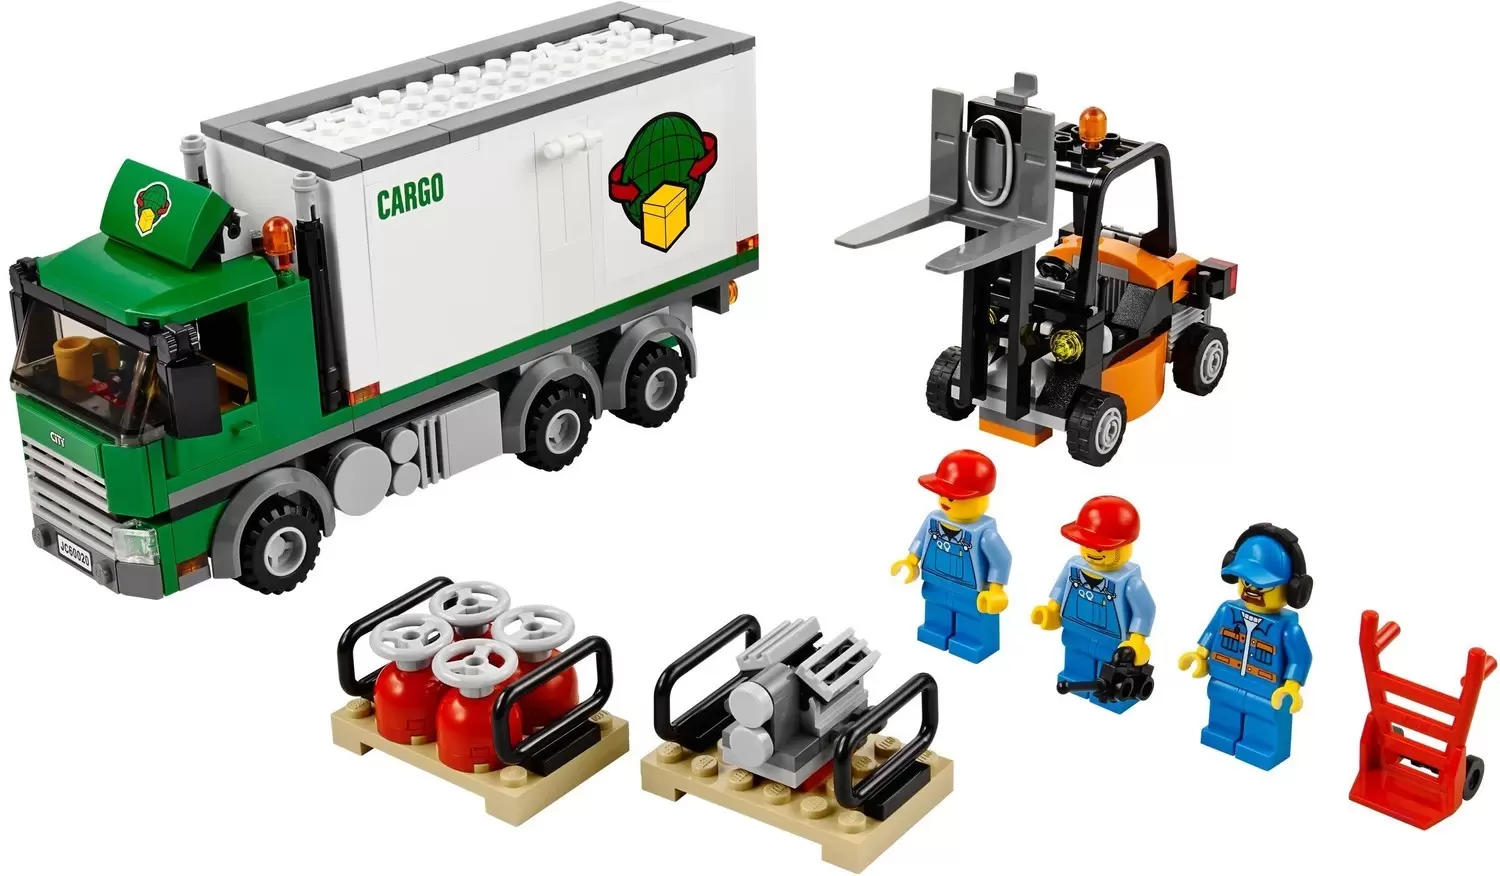 LEGO CITY - Cargo Truck